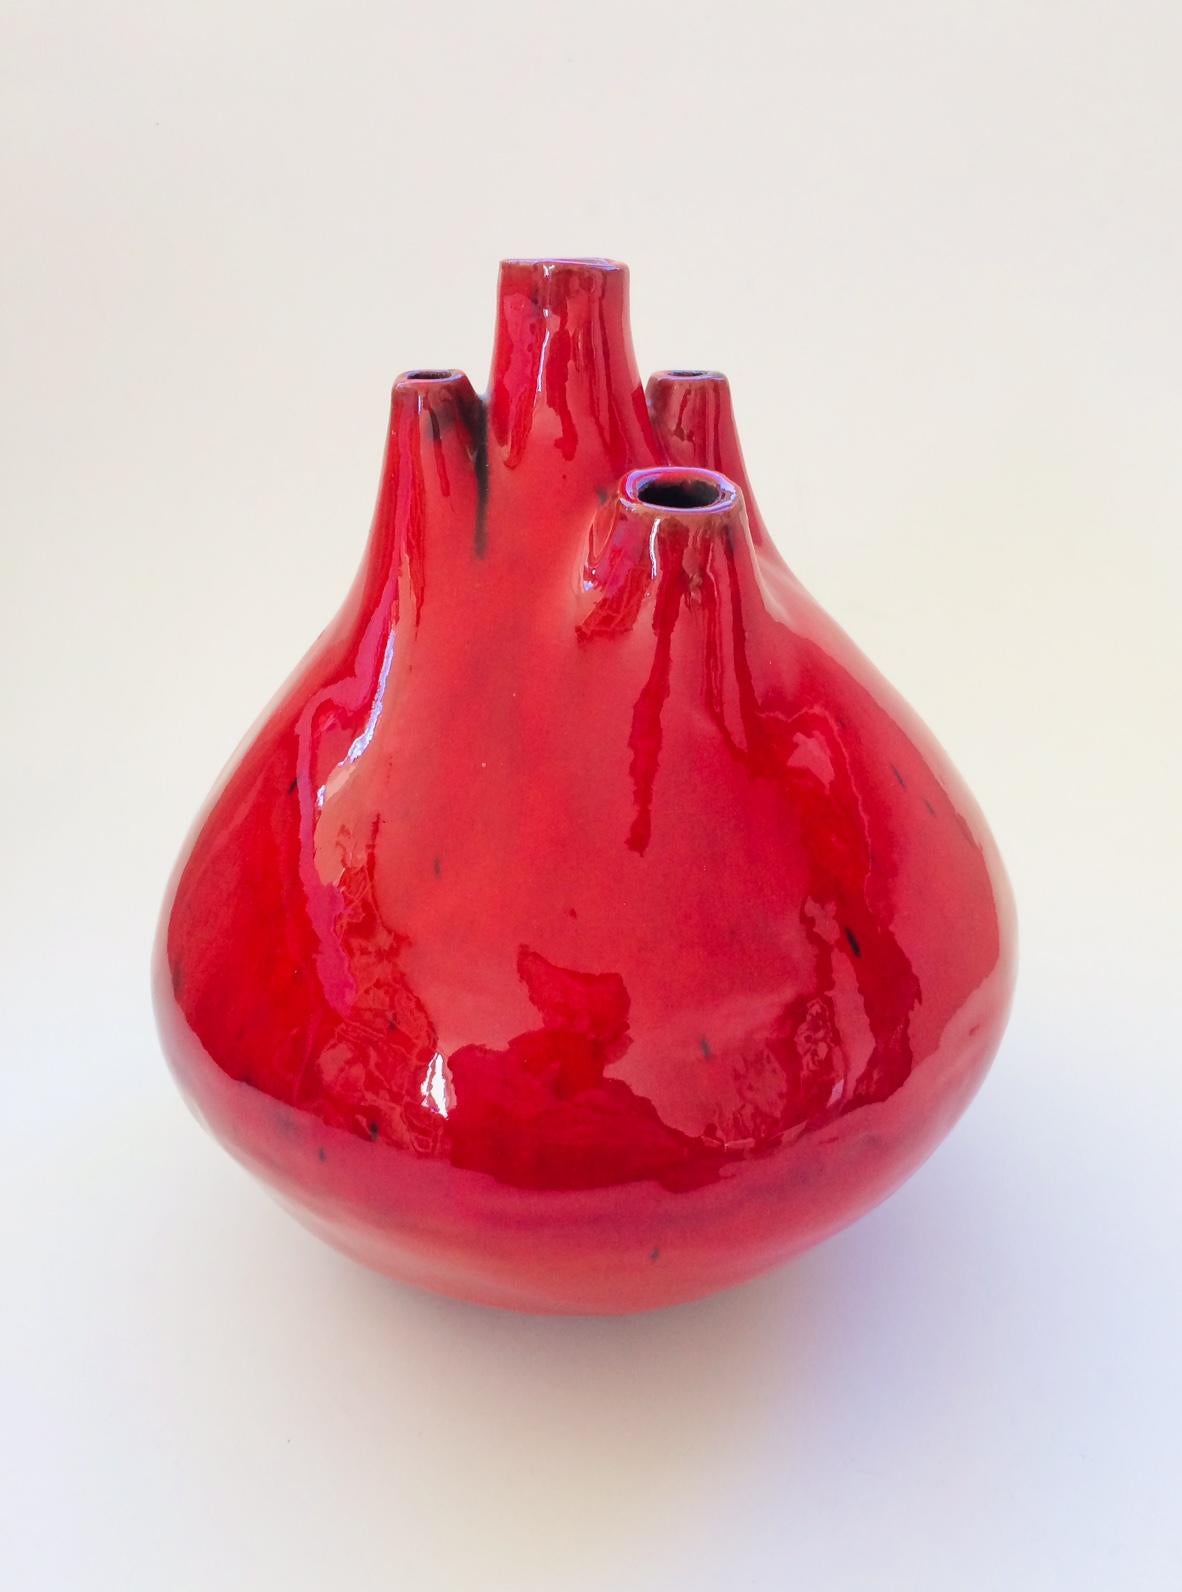 Vintage Midcentury Modern Belgian Art Pottery Spout Vase by Hugria Ceramics, Laarne Studios, Belgium 1960's. In the style of the famous Perignem Amphora Studio pottery vases. Large & Rare model vase. Selenium red glazed. Stamped with Hugria -3 -